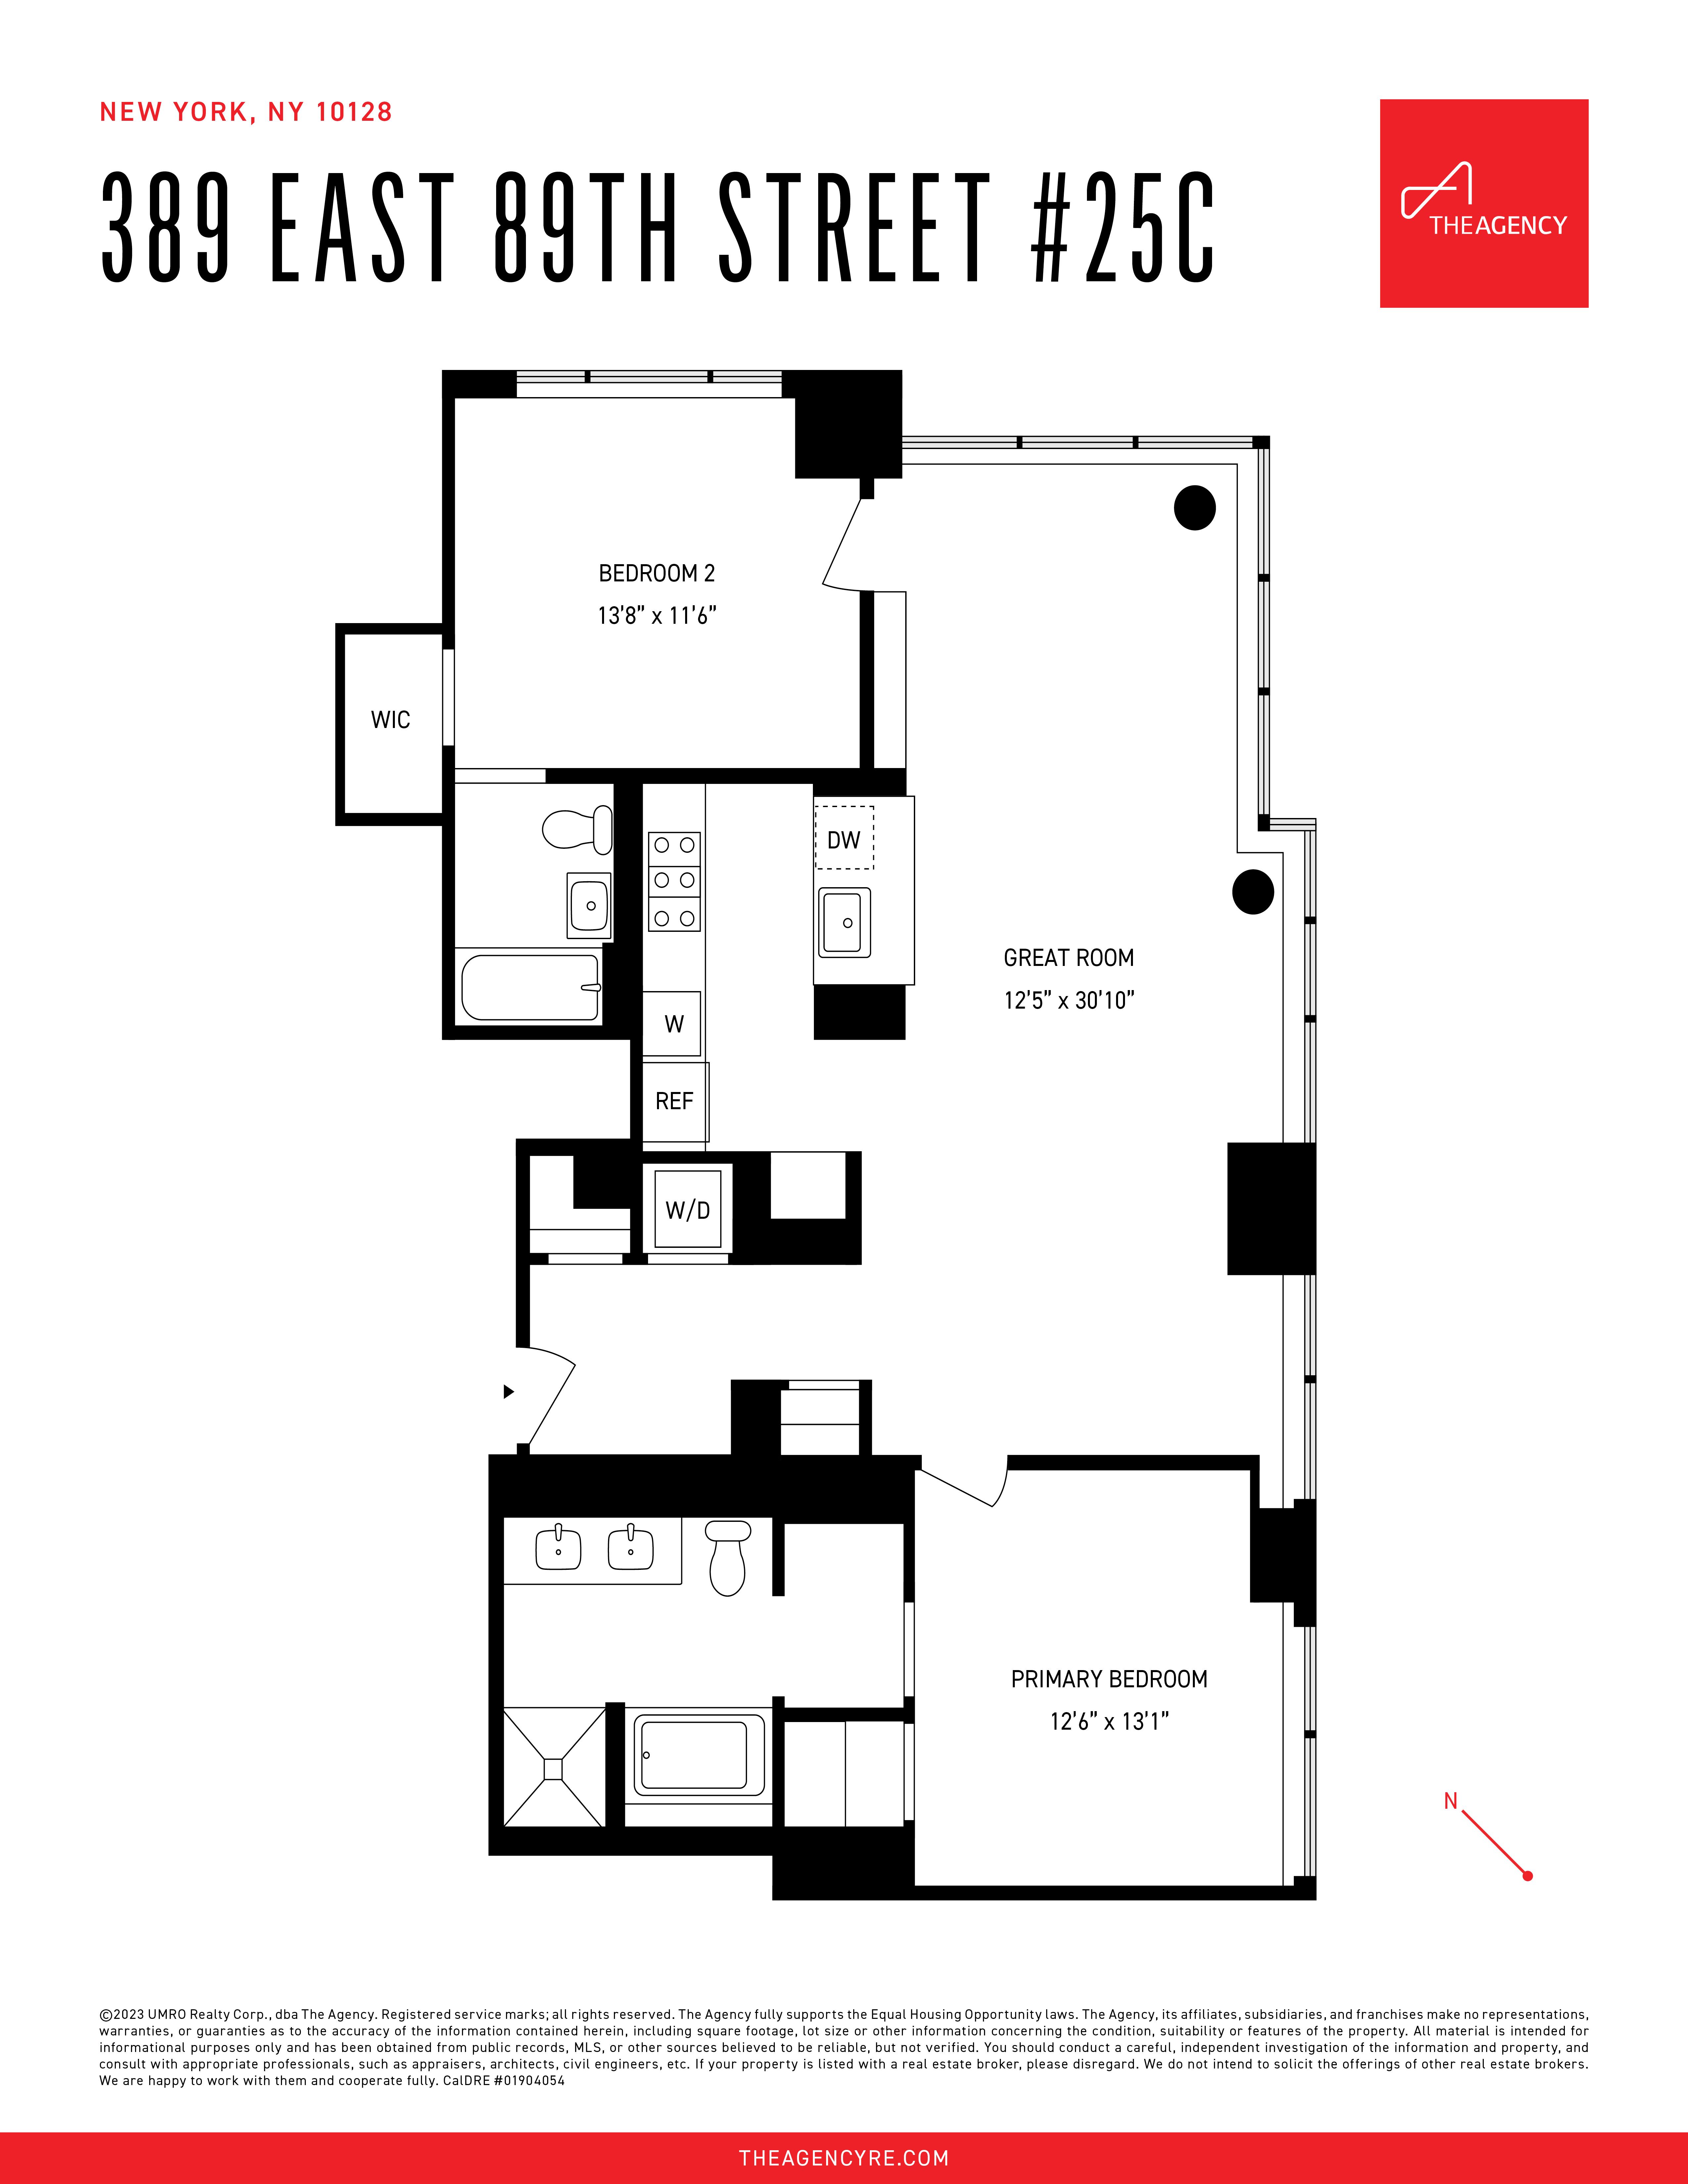 Floorplan for 389 East 89th Street, 25-C